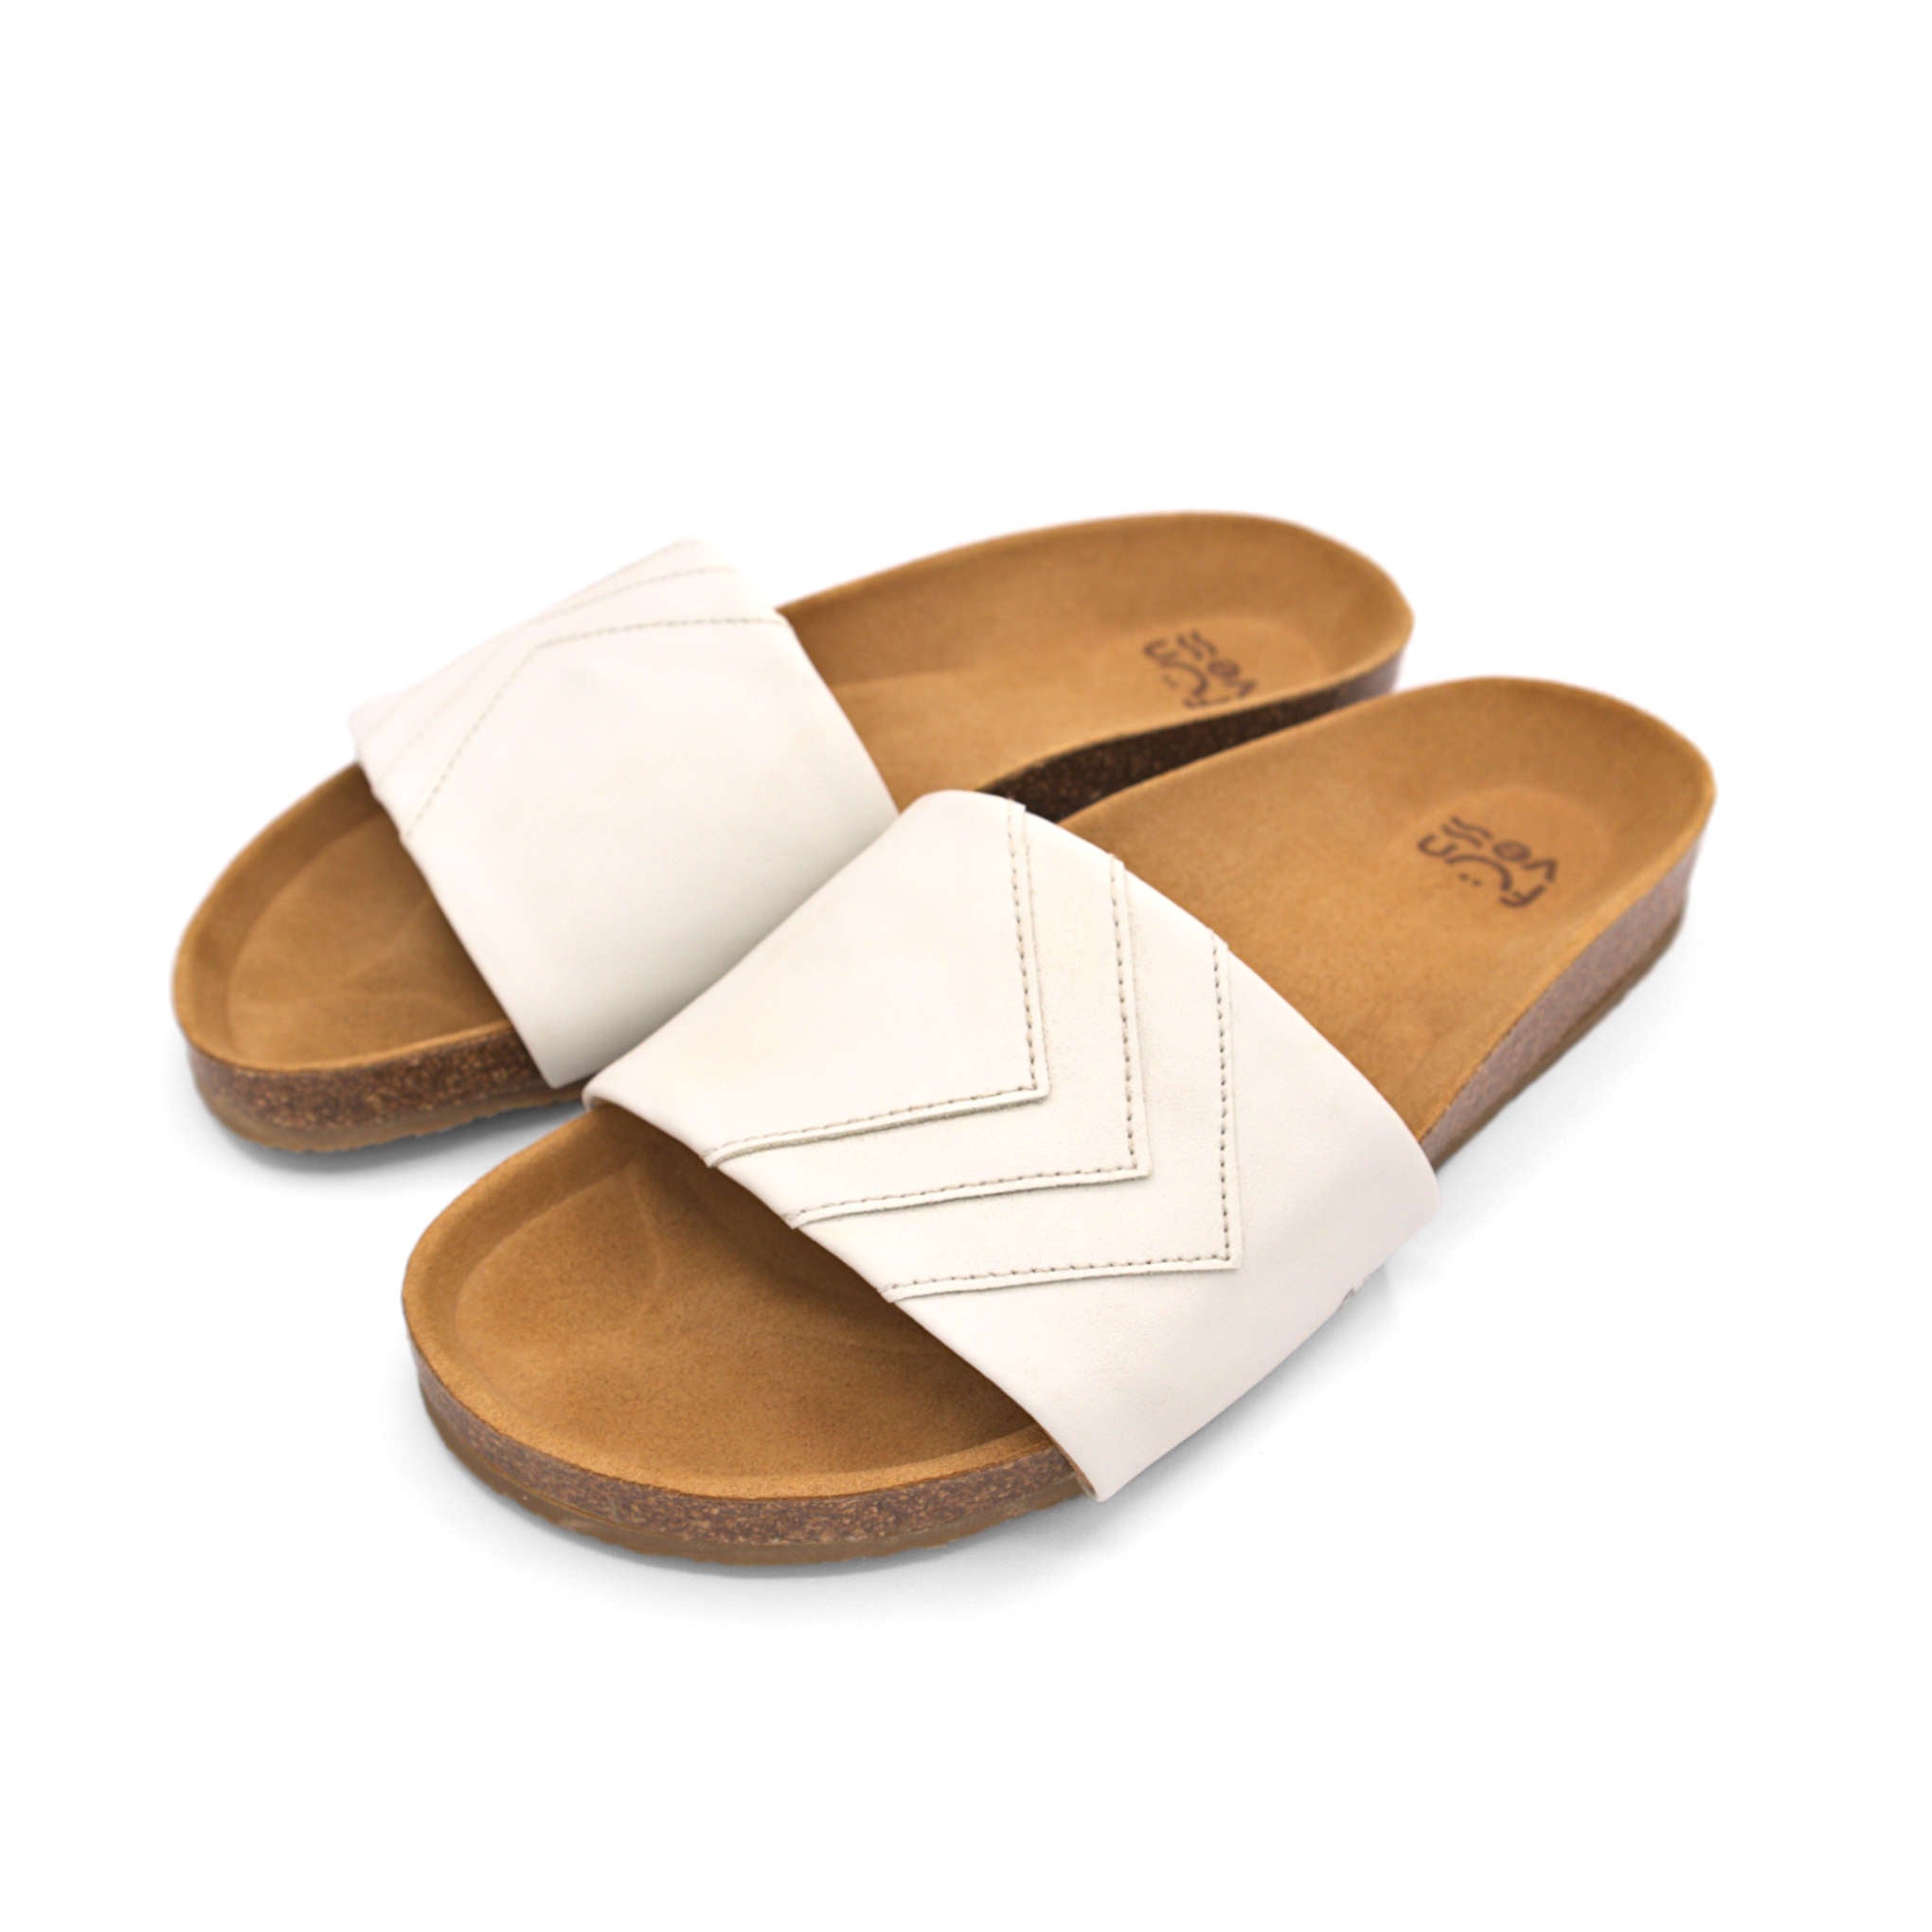 'YANG' - Weiße Sandalen, monochrom / einfarbig - vegan